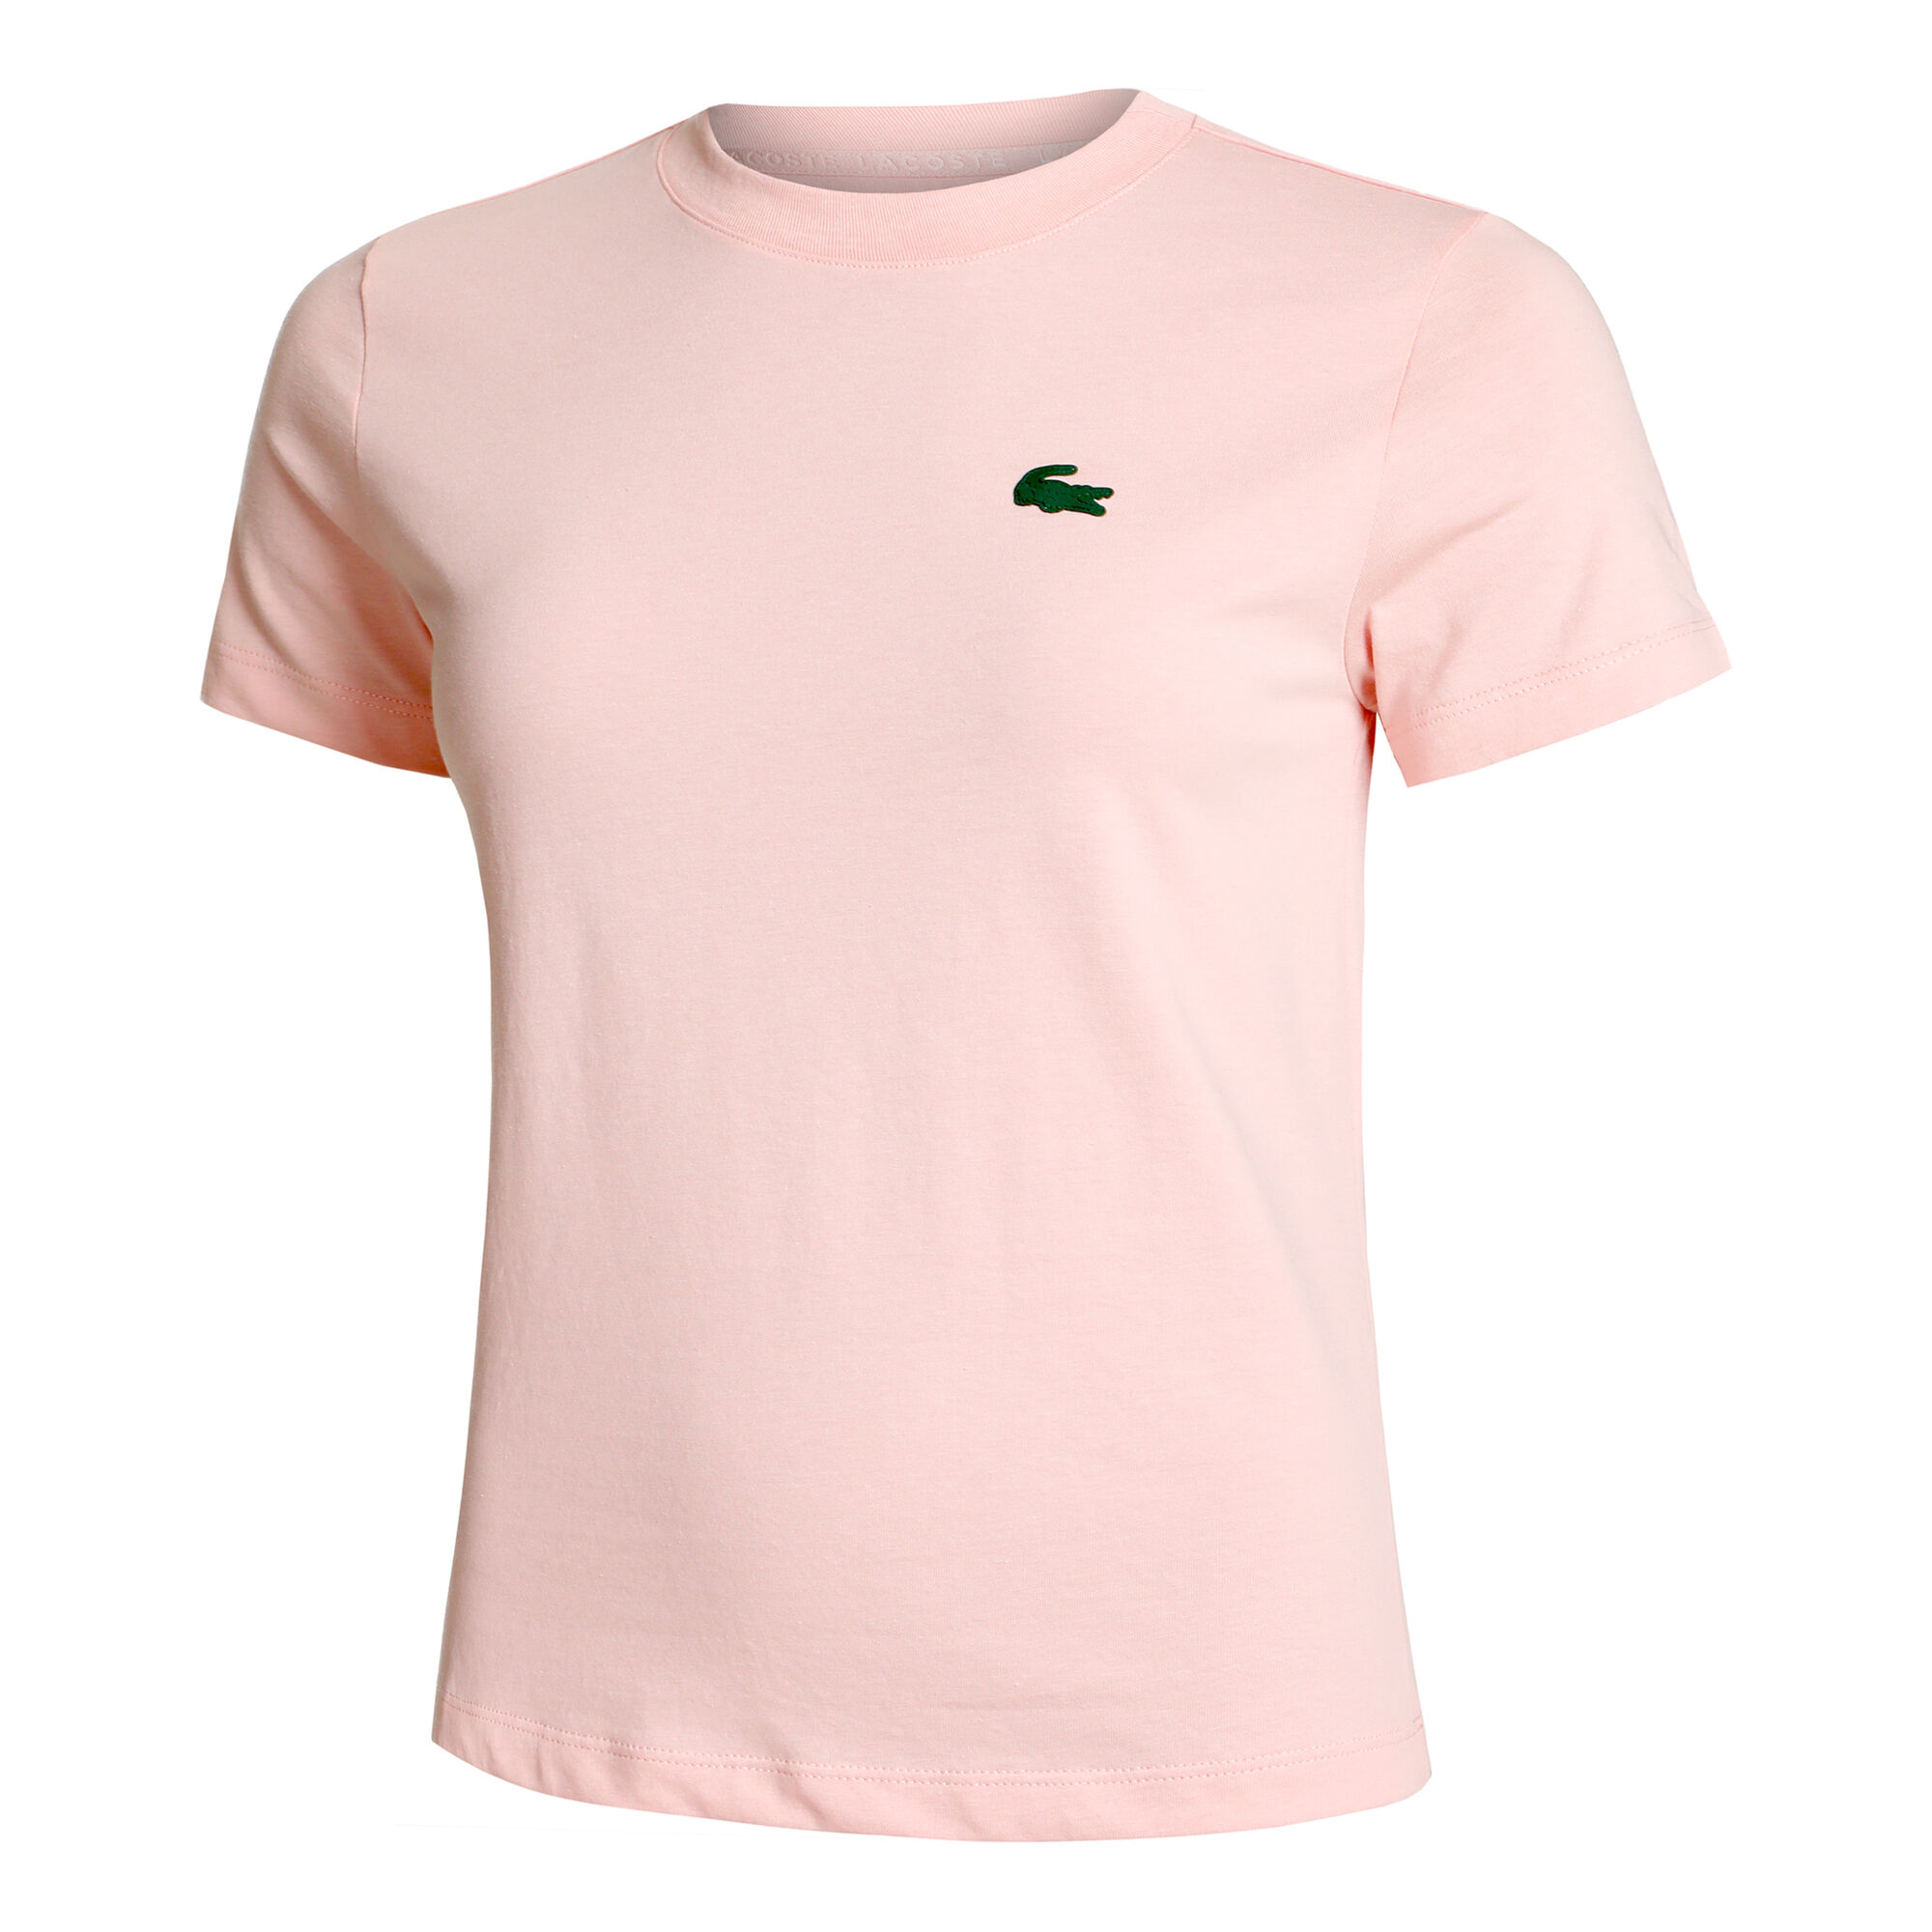 prosa Ib ske Lacoste T-shirt Damer - Rosa køb online | Tennis-Point